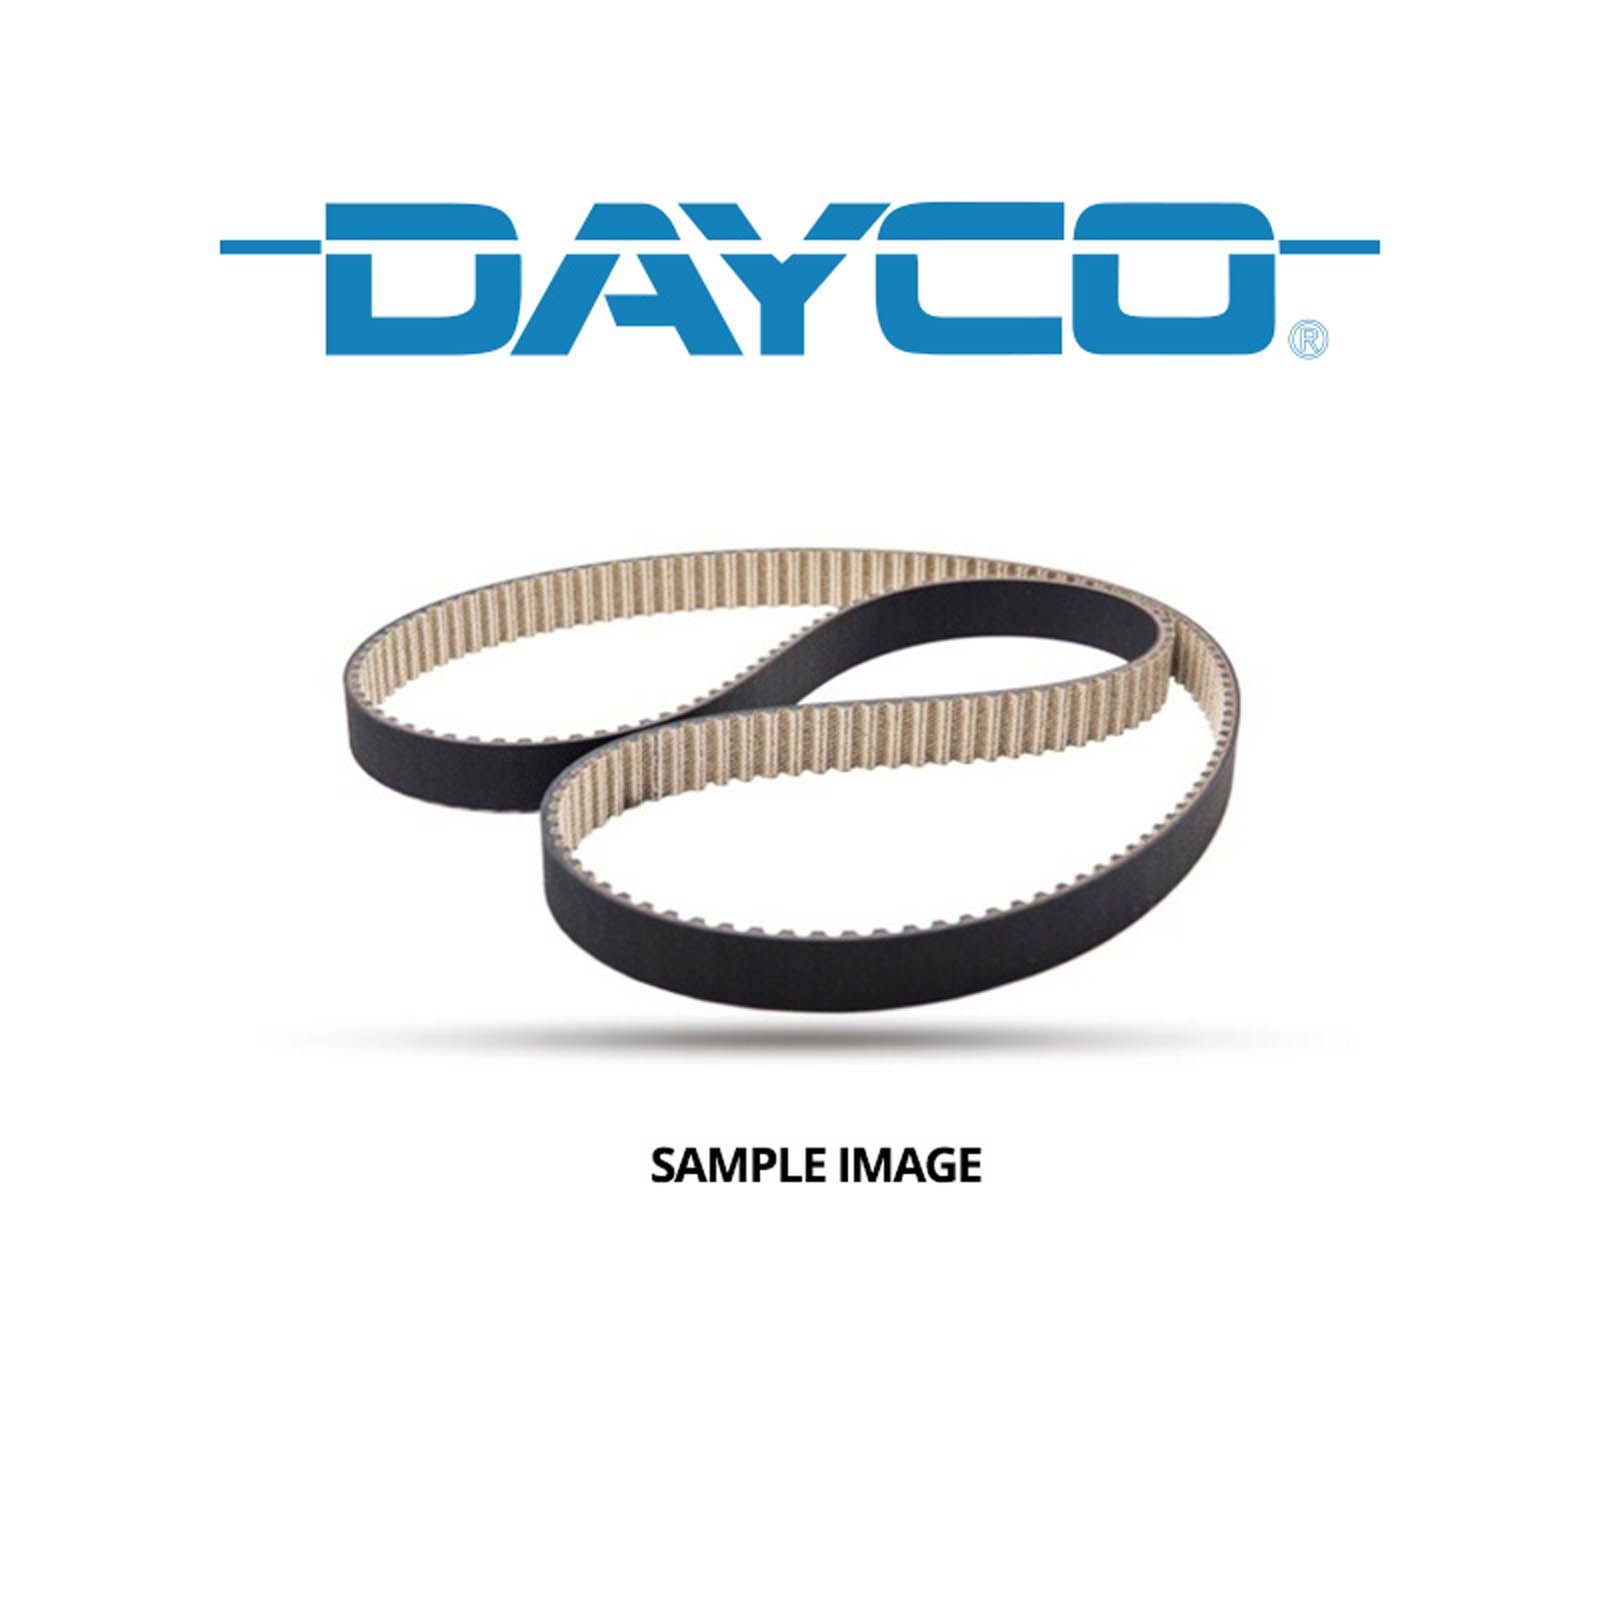 New DAYCO ATV Drive Belt HP 30.17 X 1038 HP2002 #ATVDBHP2002